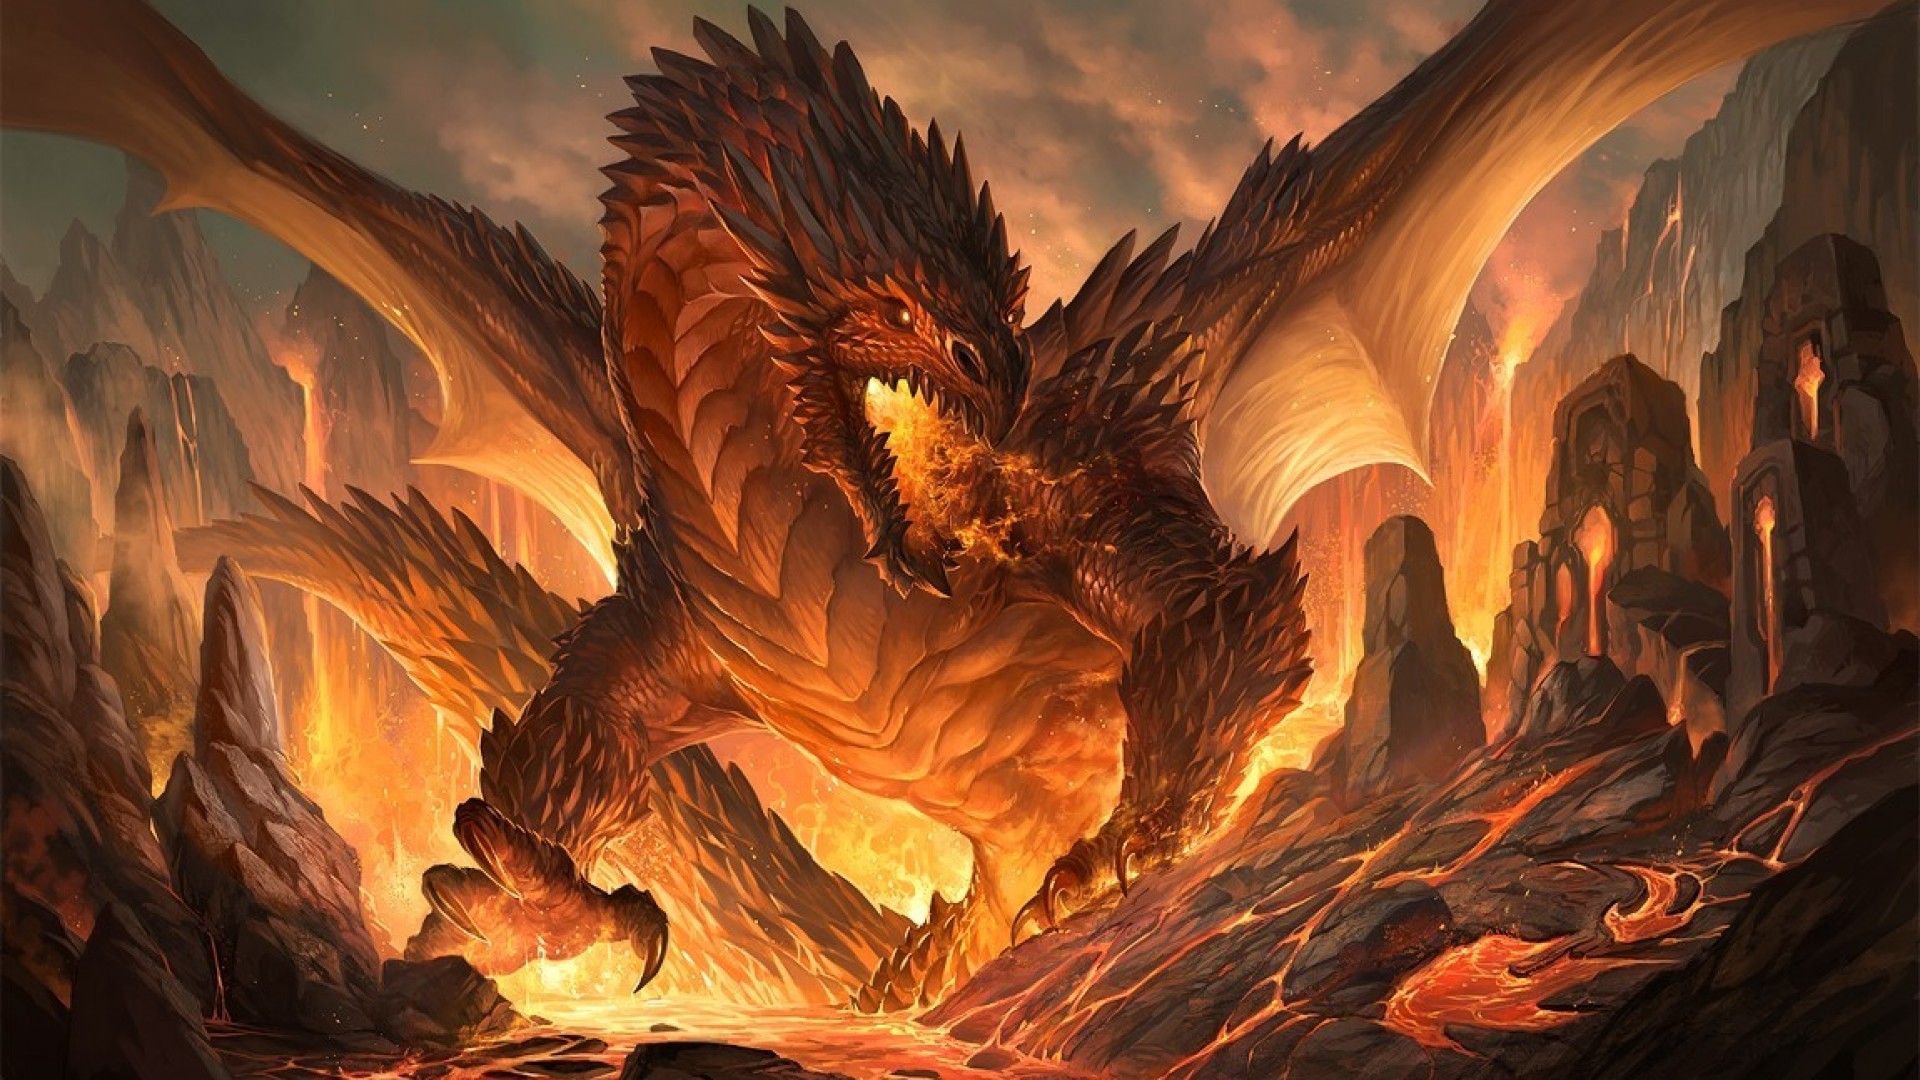 Dragons: Legends of the Skies 884931-fantasy-dragon-wallpaper-1920x1080-image